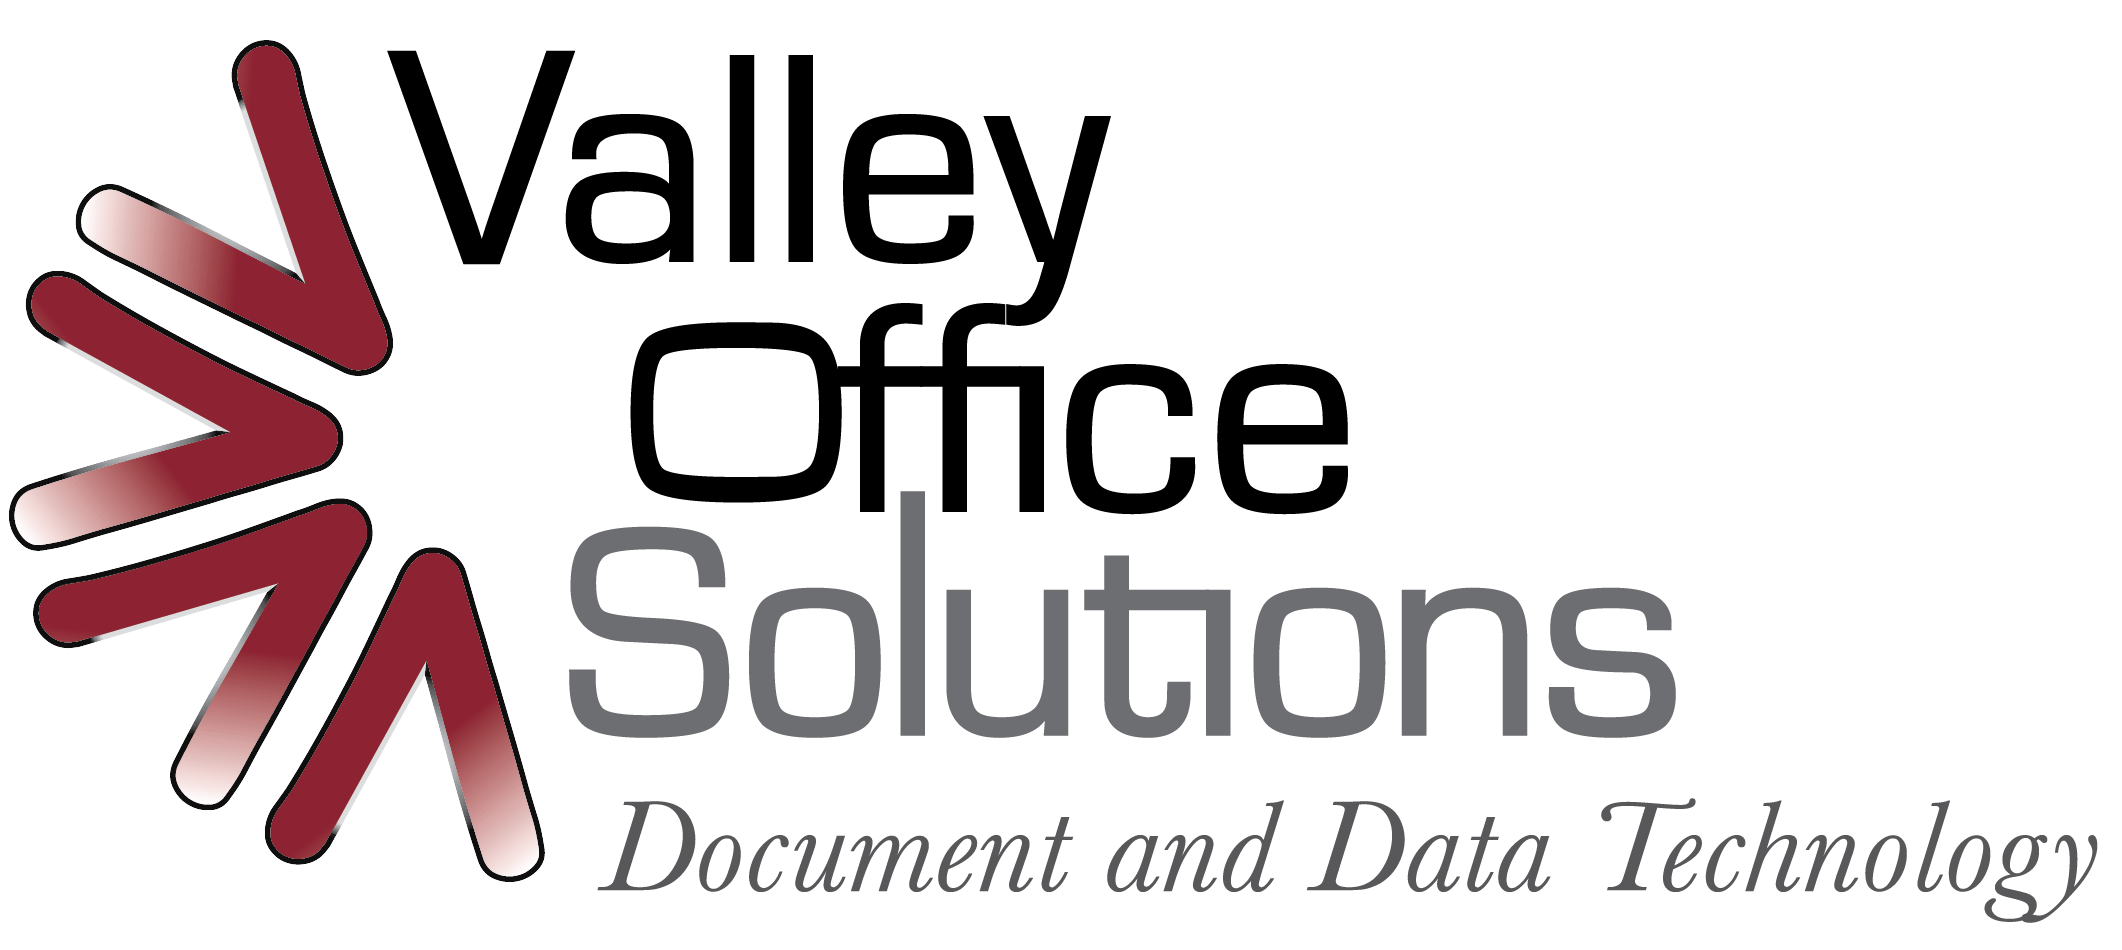 Valley Office Solutions Logo